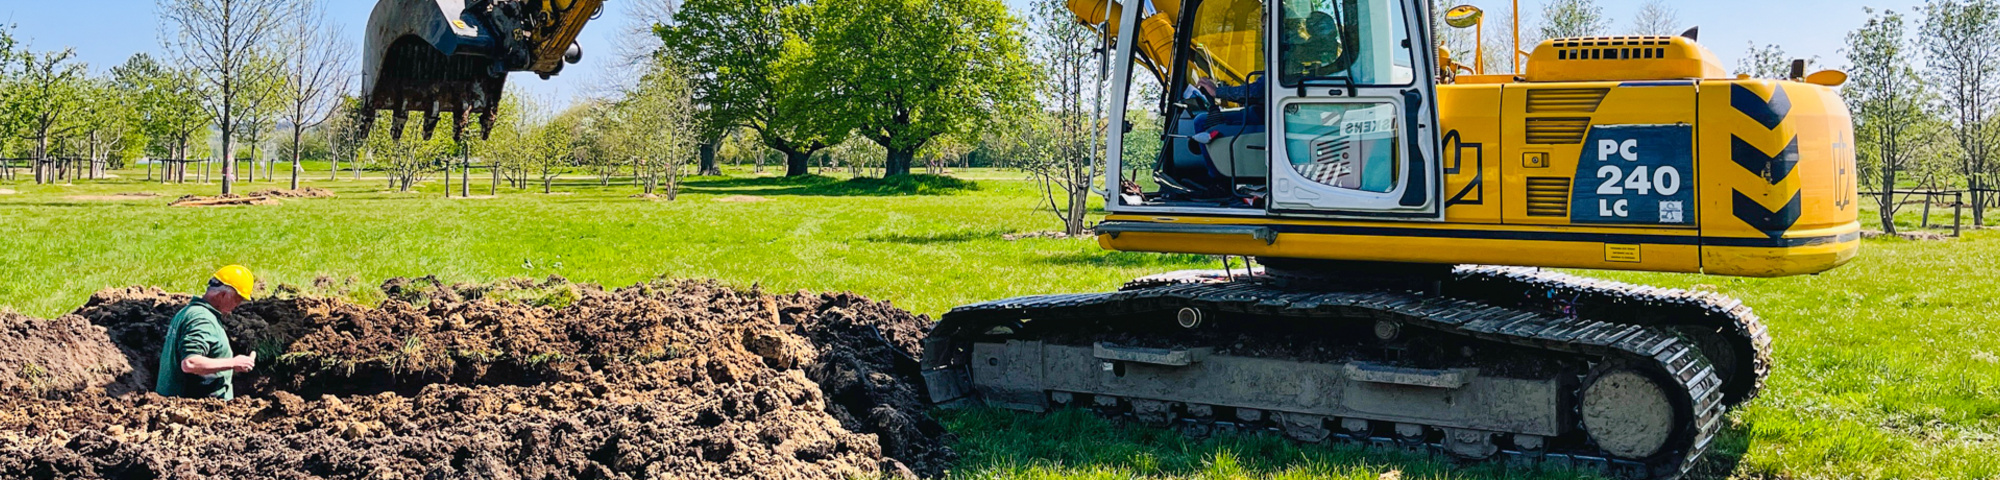 Planting-hole preparation and soil improvement